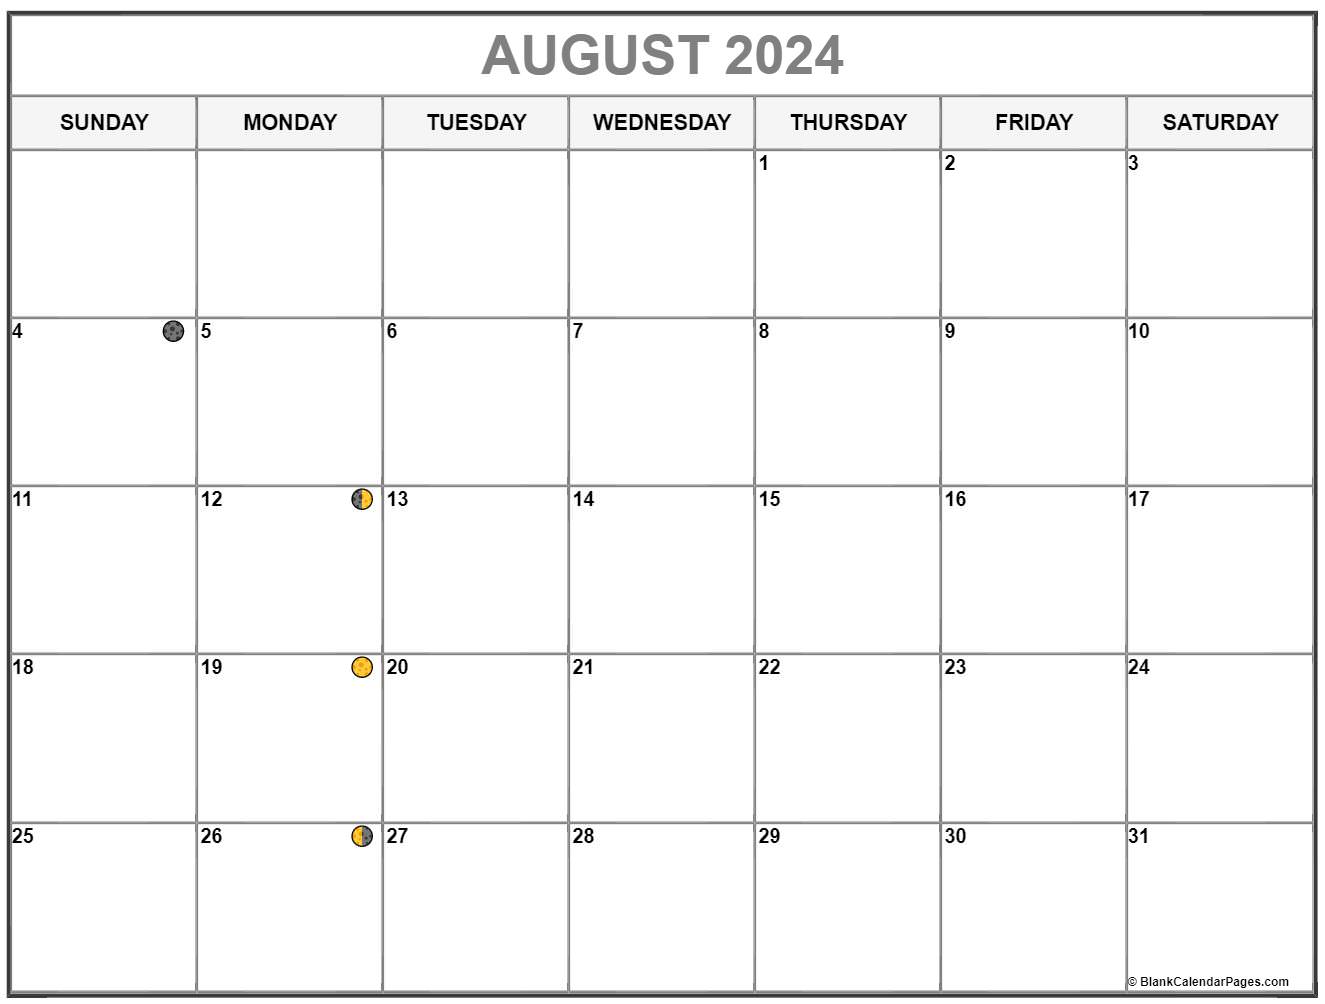 August 2022 Lunar Calendar Moon Phase Calendar